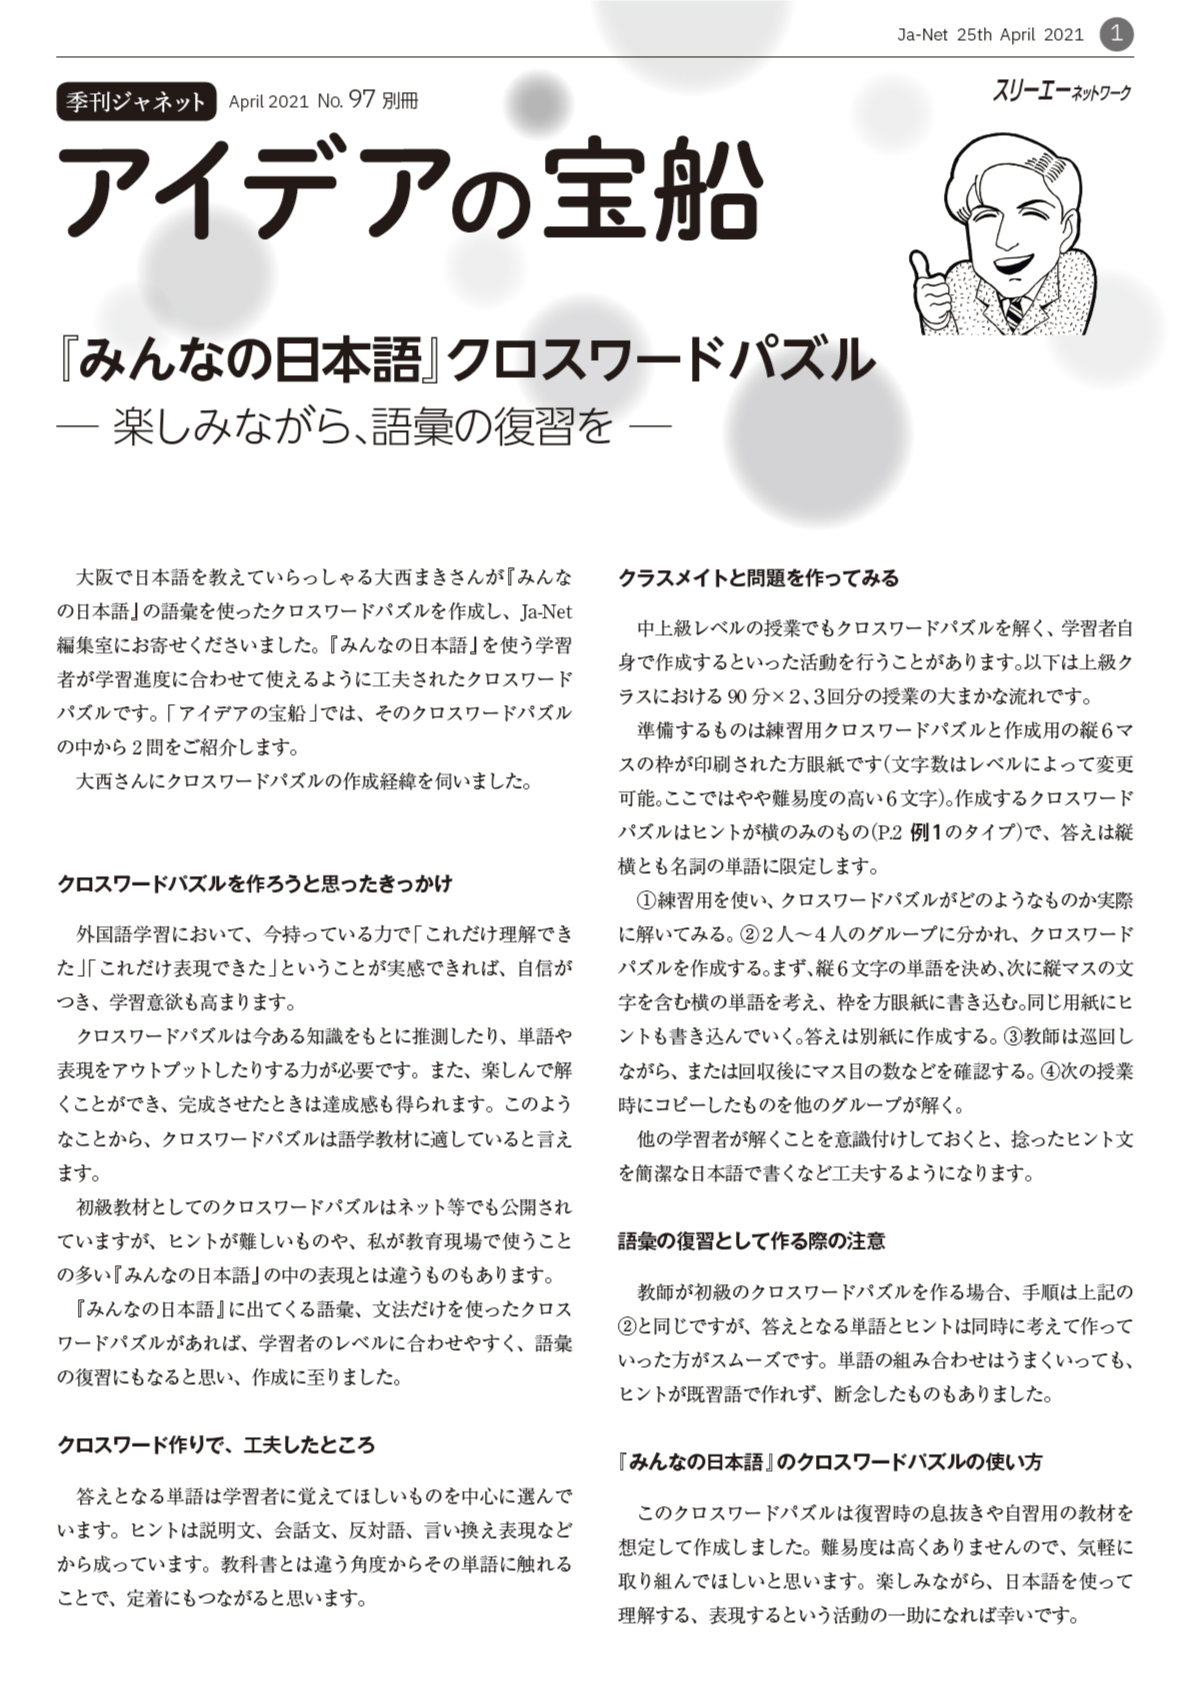 Ja Net 97号 別冊 みんなの日本語 クロスワードパズル 楽しみながら 語彙の復習を 21 04 25発行 3a Plus